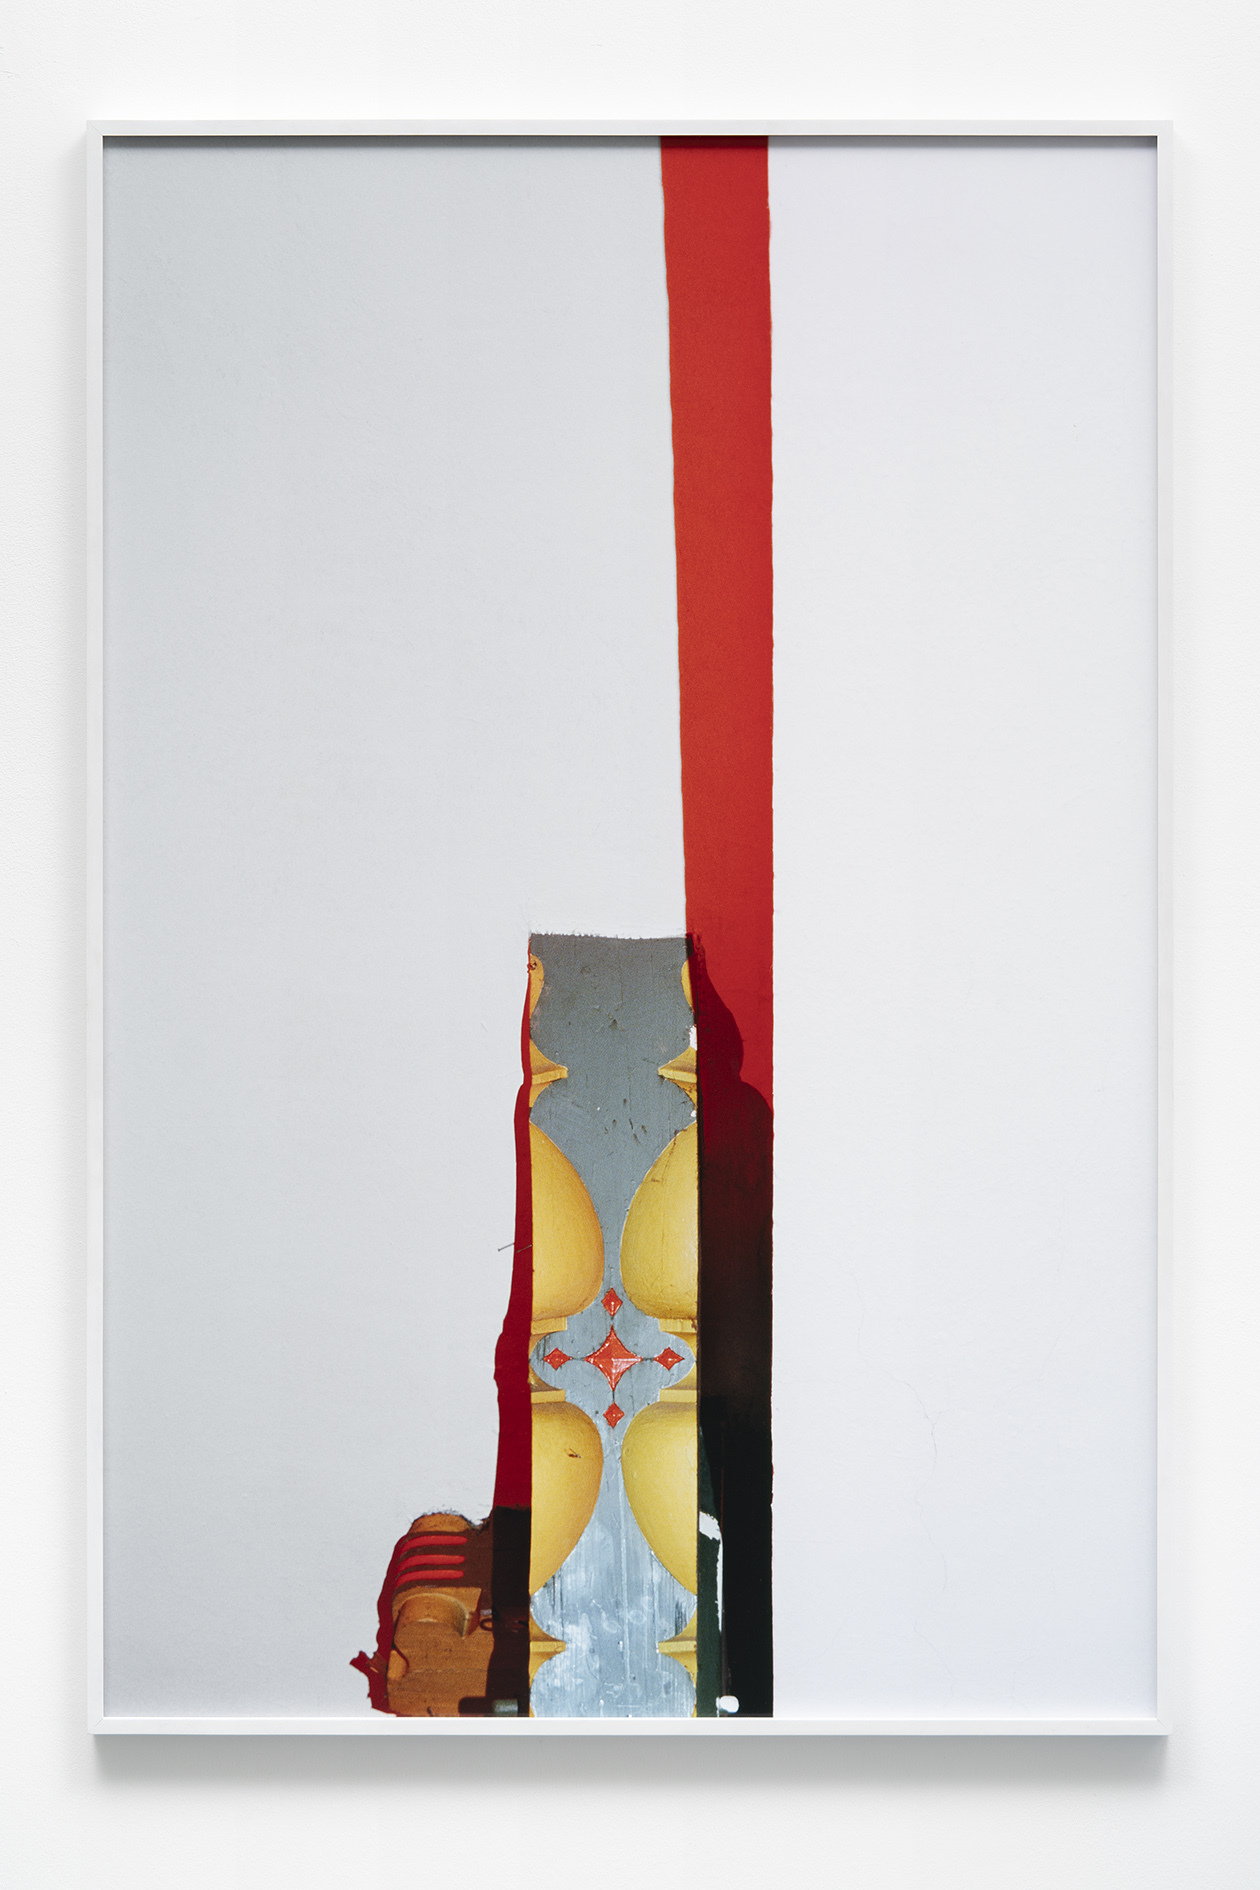 Andrea Grützner, Erbgericht, Untitled 3, 2014 – Archival pigment print, framed, 149 x 100 x 4 cm. Courtesy the artist and Galerie Robert Morat, Berlin.